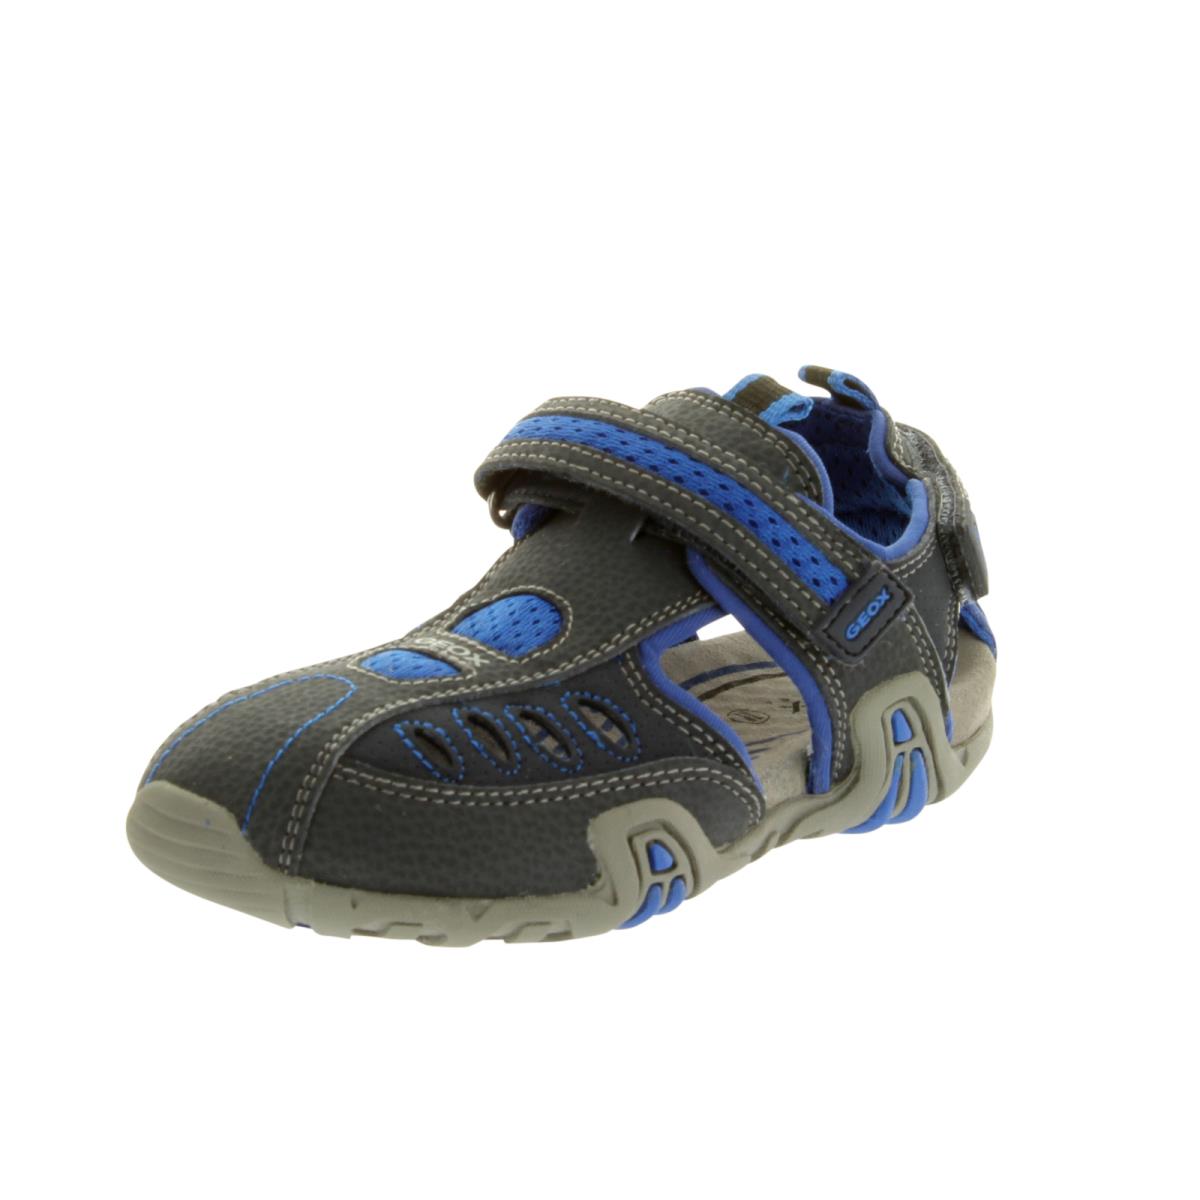 Geox Boys Kraze D Fashion Adventure Sandals Navy/Blue